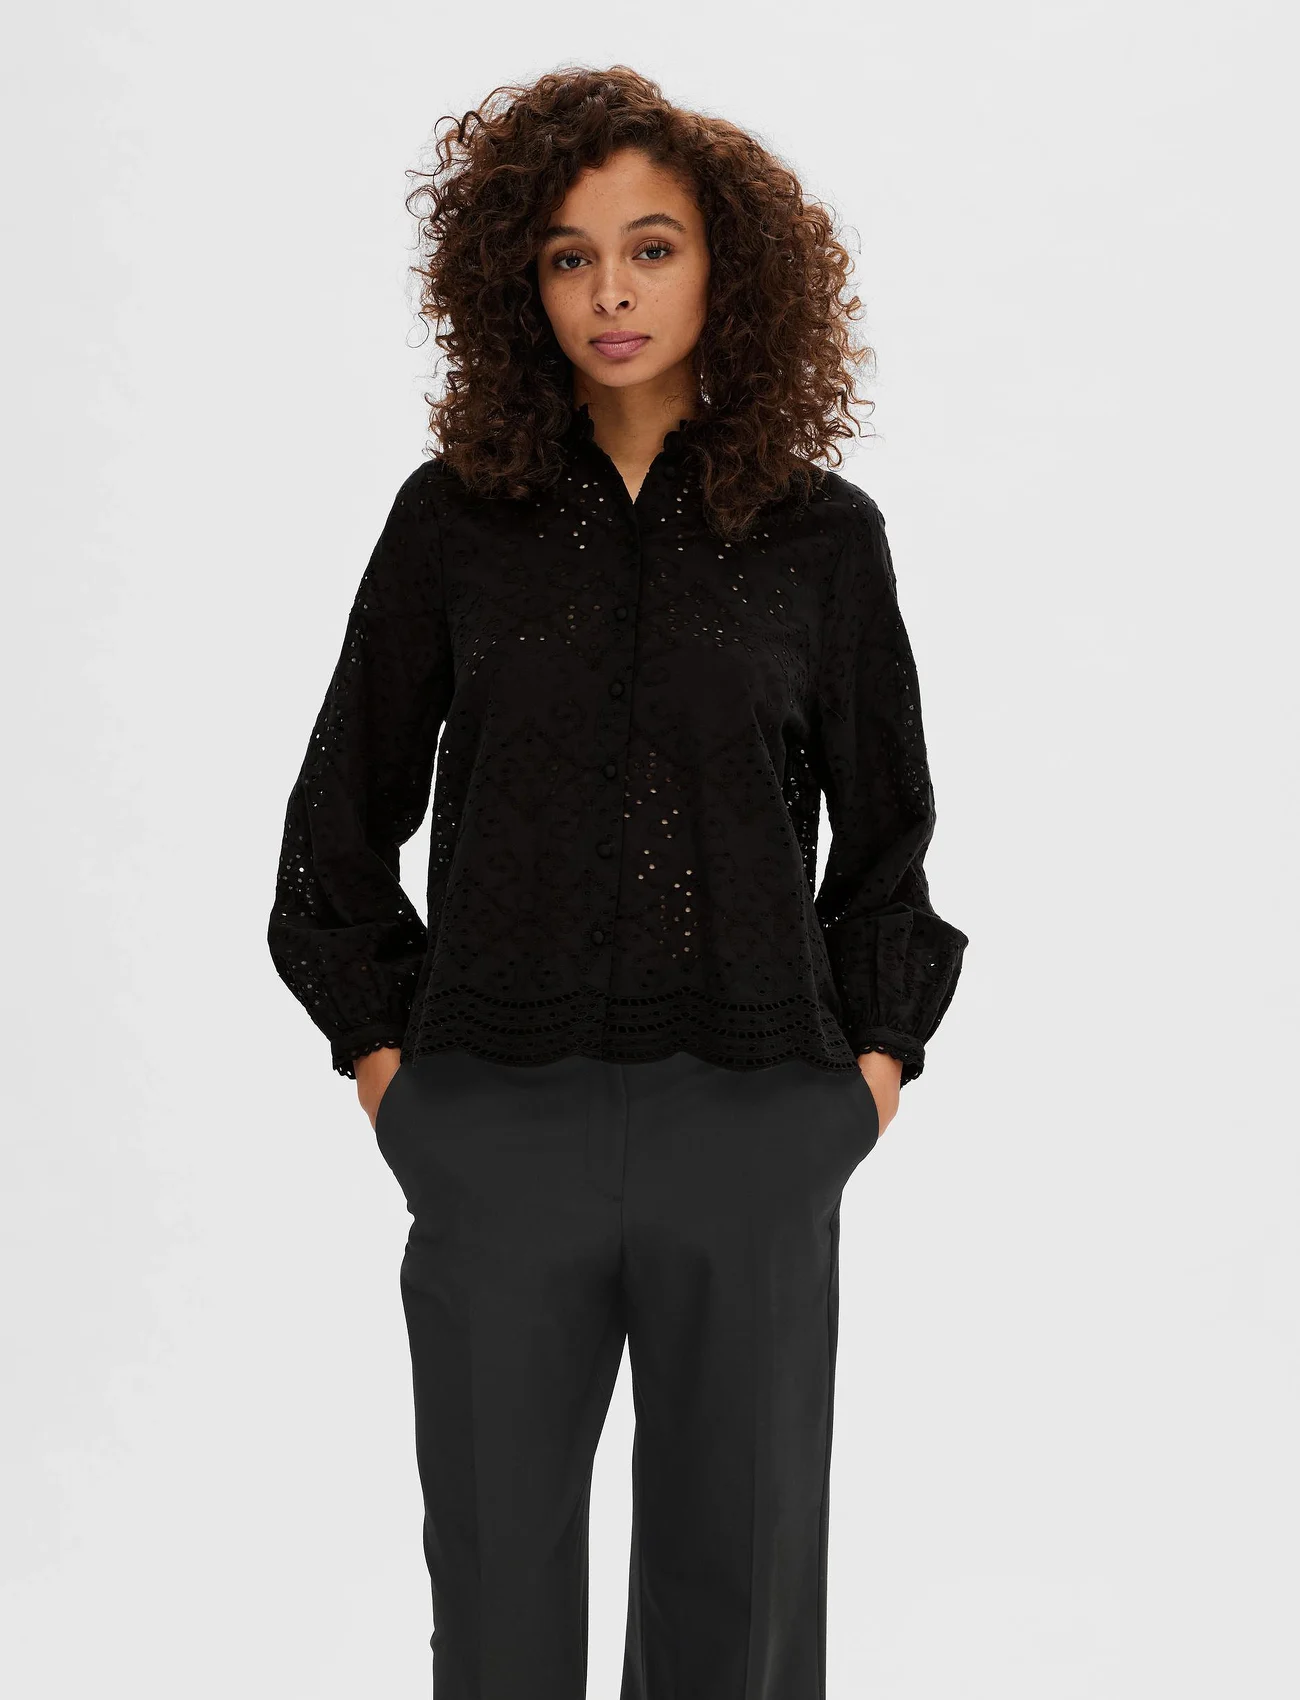 Selected Femme - SLFTATIANA L/S EMBR SHIRT NOOS - long-sleeved shirts - black - 1